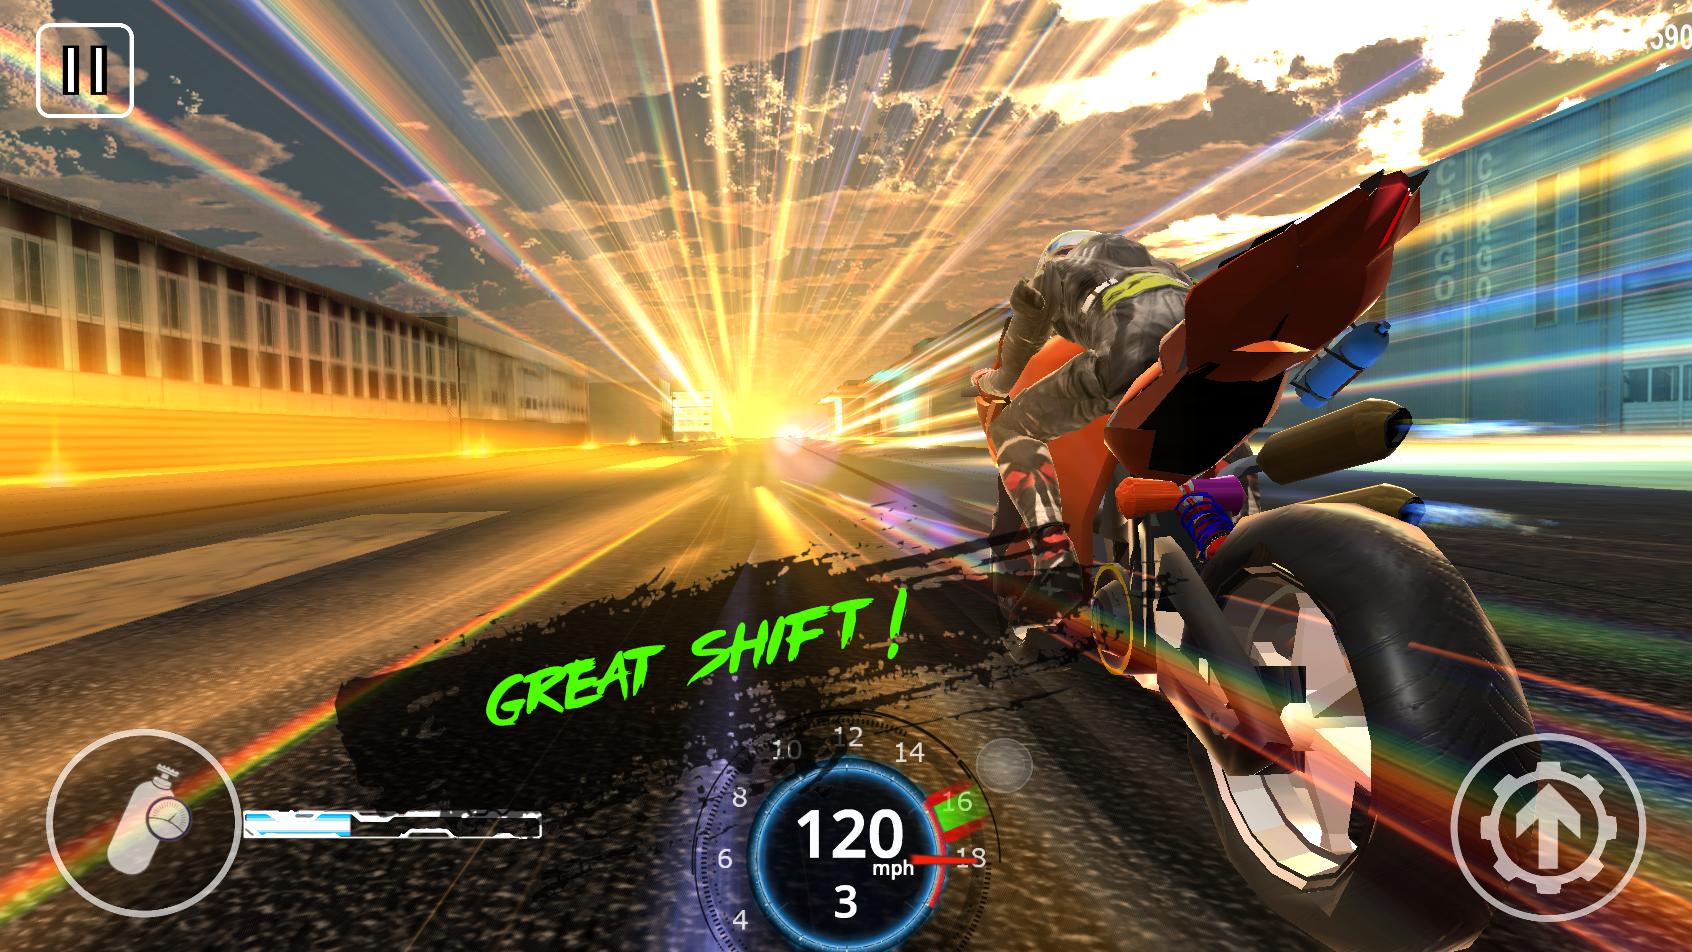 Rebel Gears Drag Bike Racing / CSR Race Moto Game 1.3.2 Screenshot 17